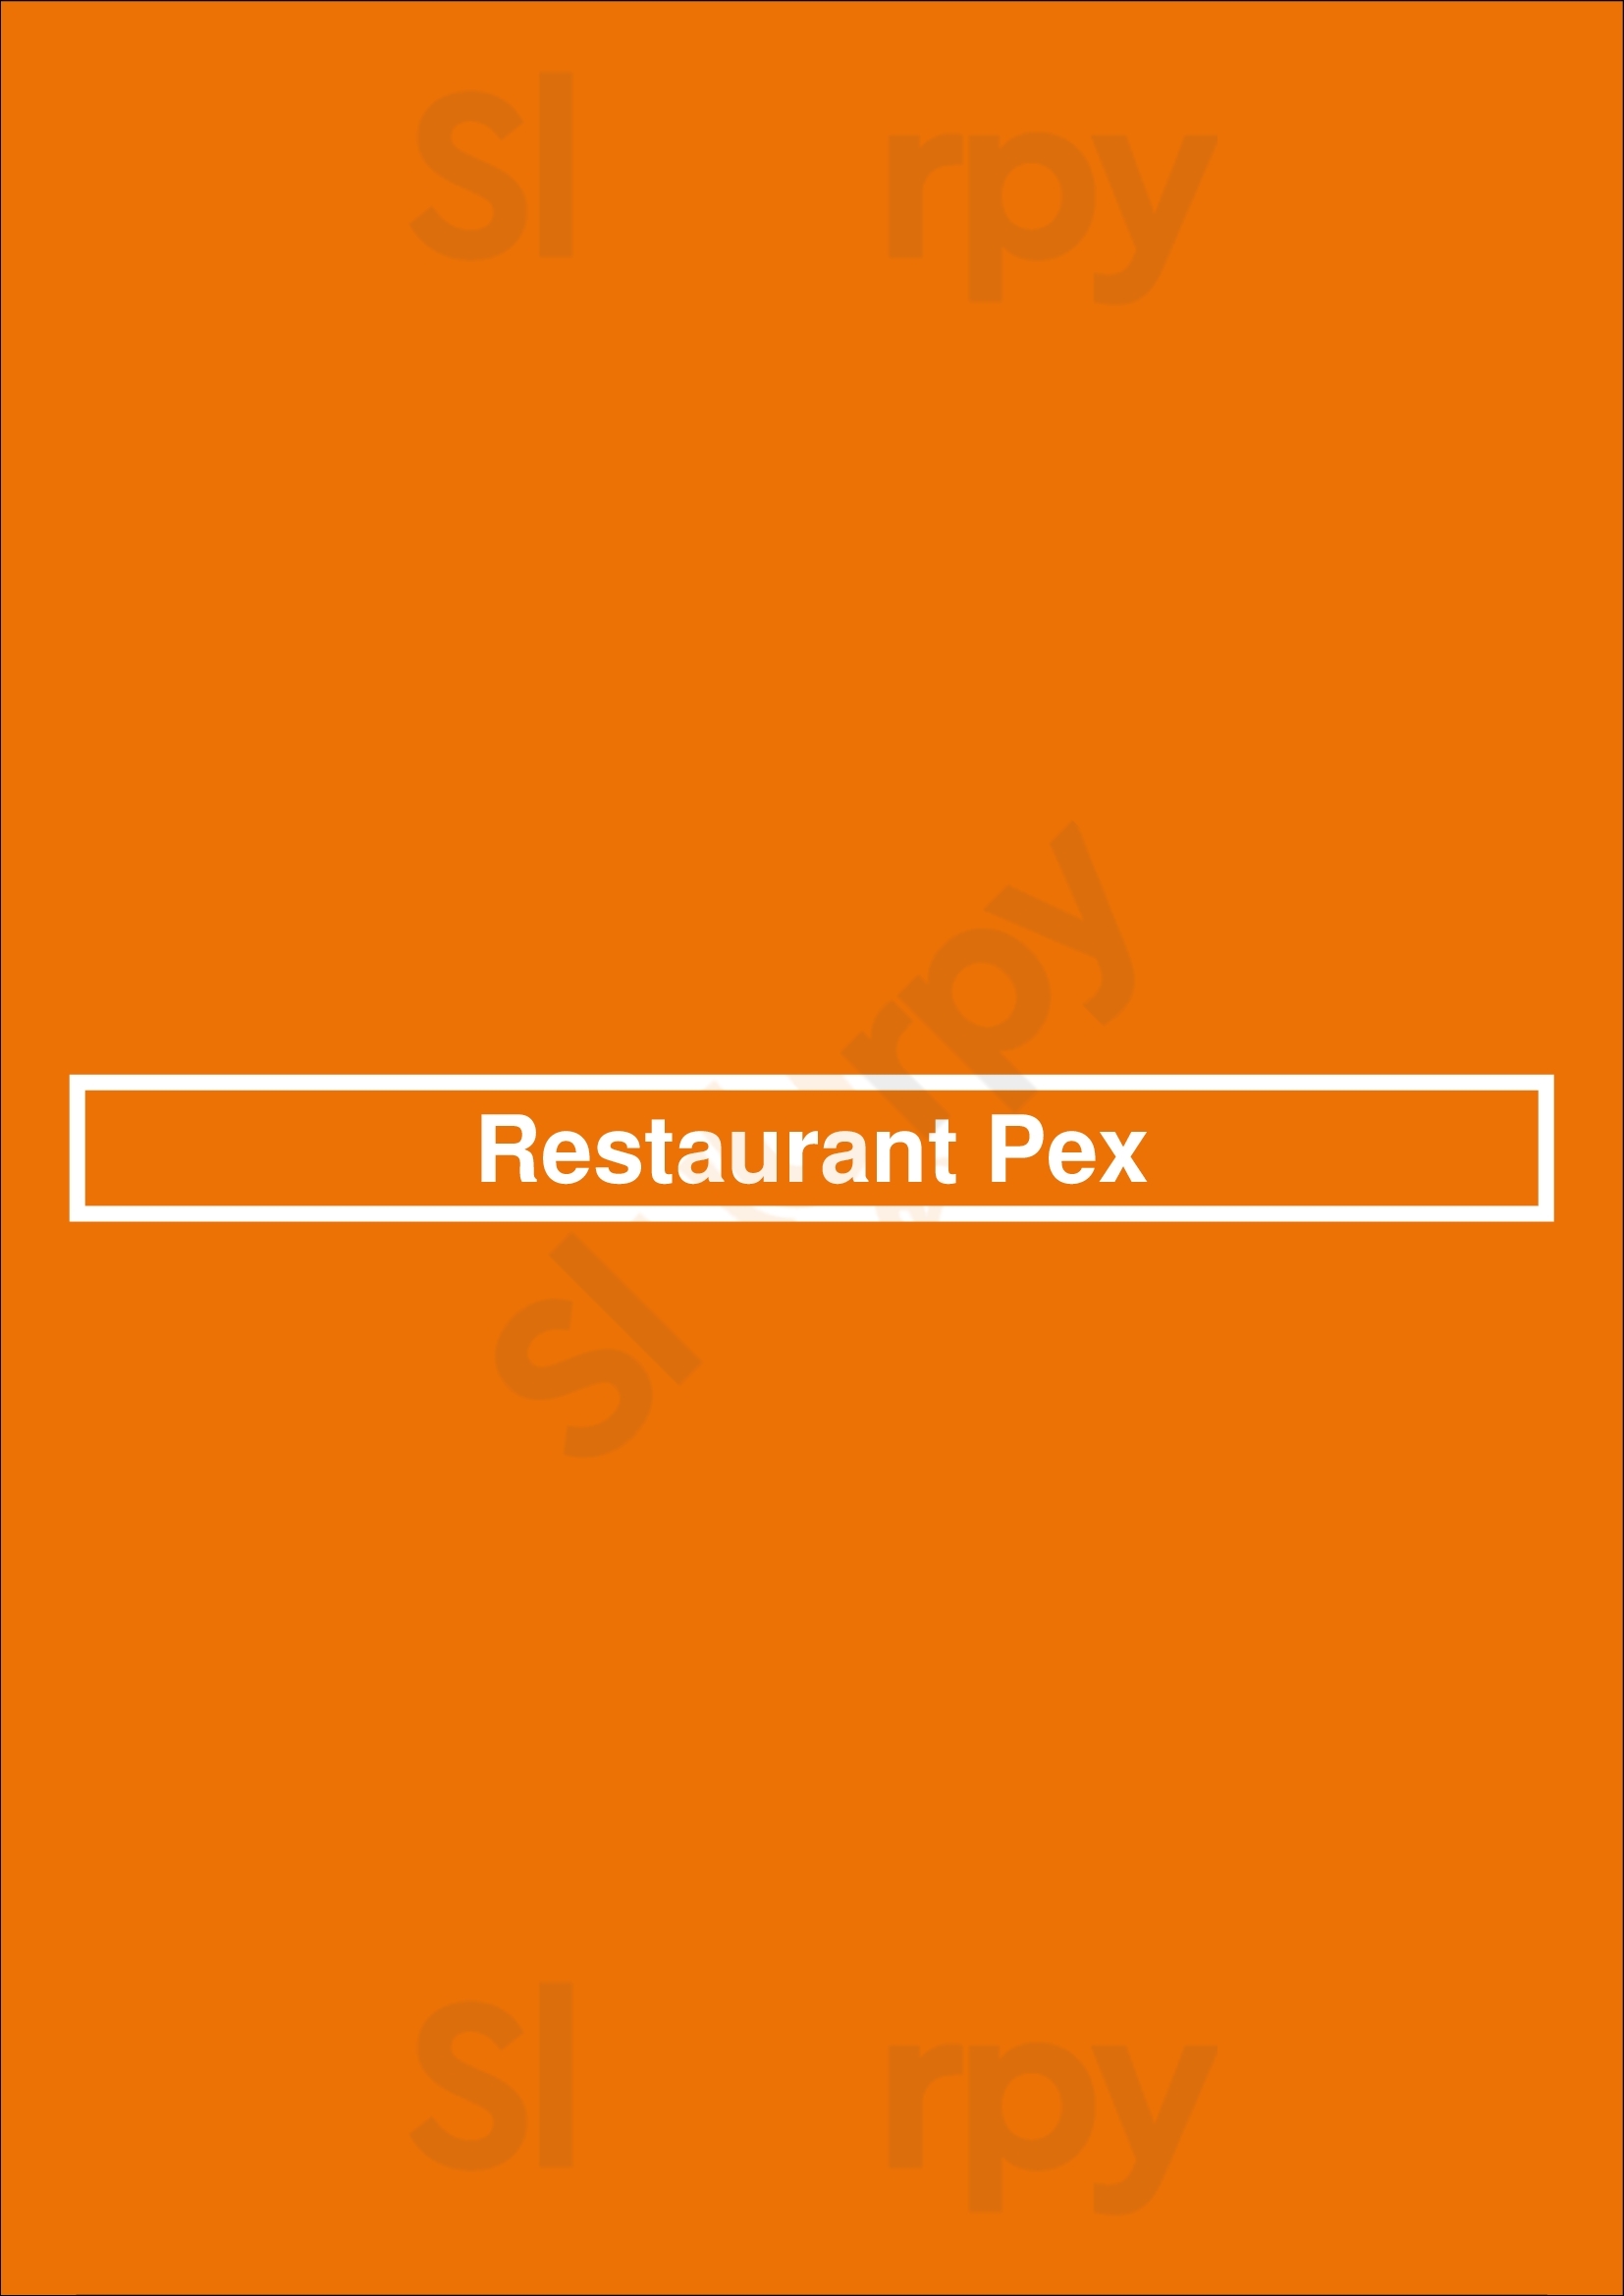 Restaurant Pex Den Haag Menu - 1